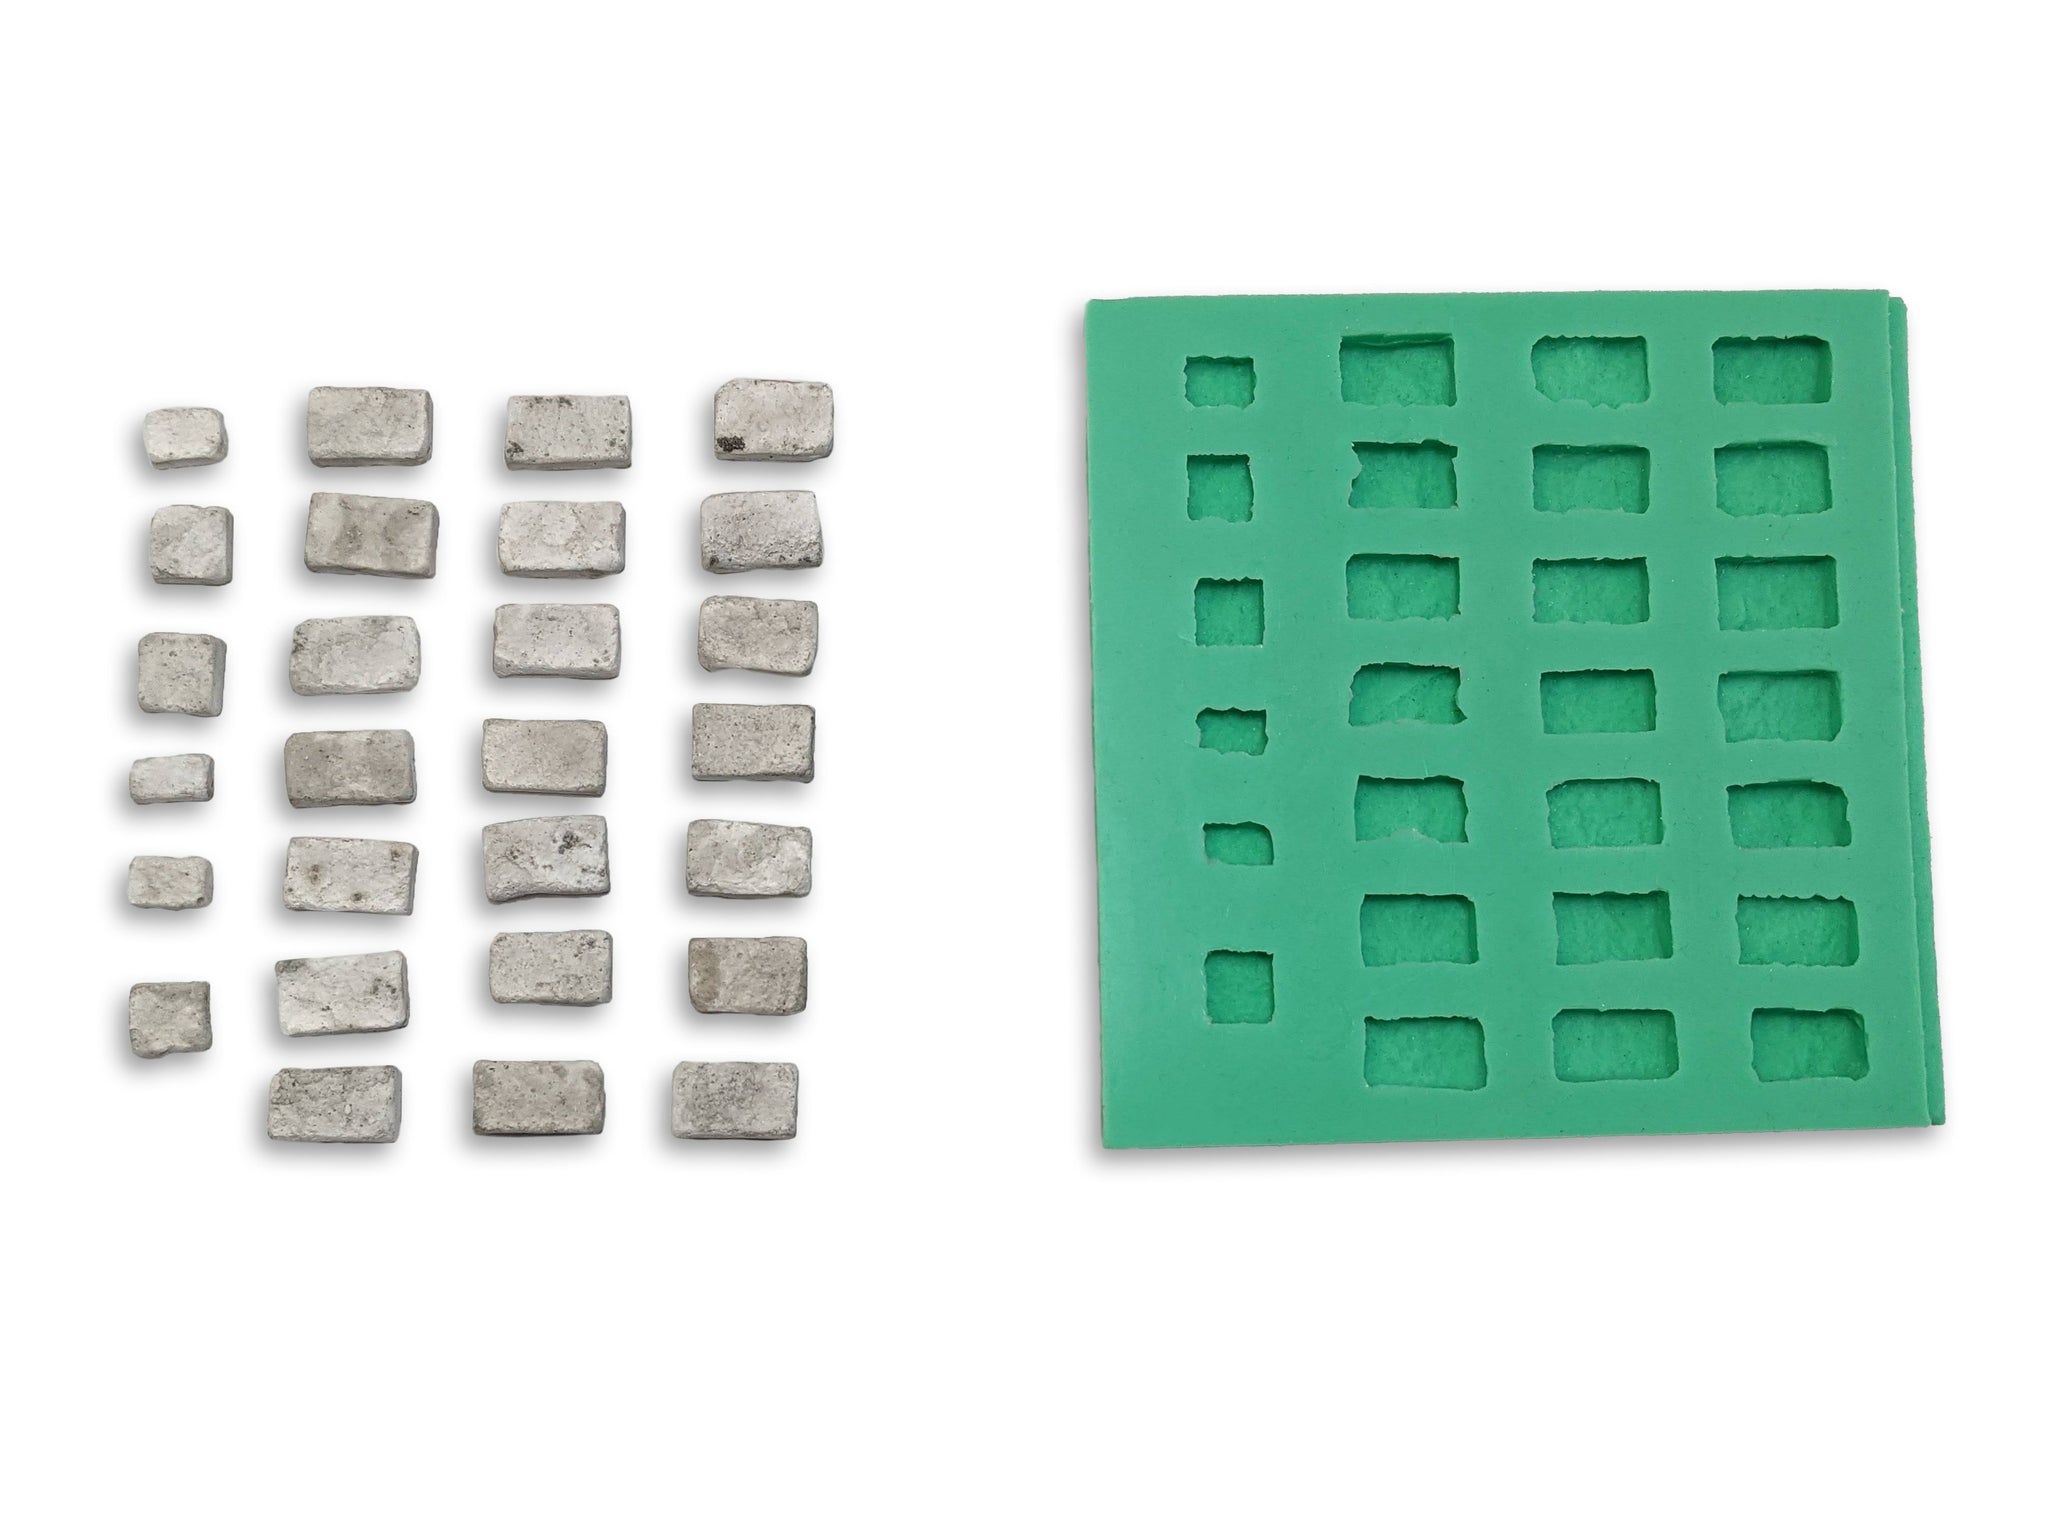 Miniature Cinder Block Mold, 1:35 Scale, Silicone Rubber. A